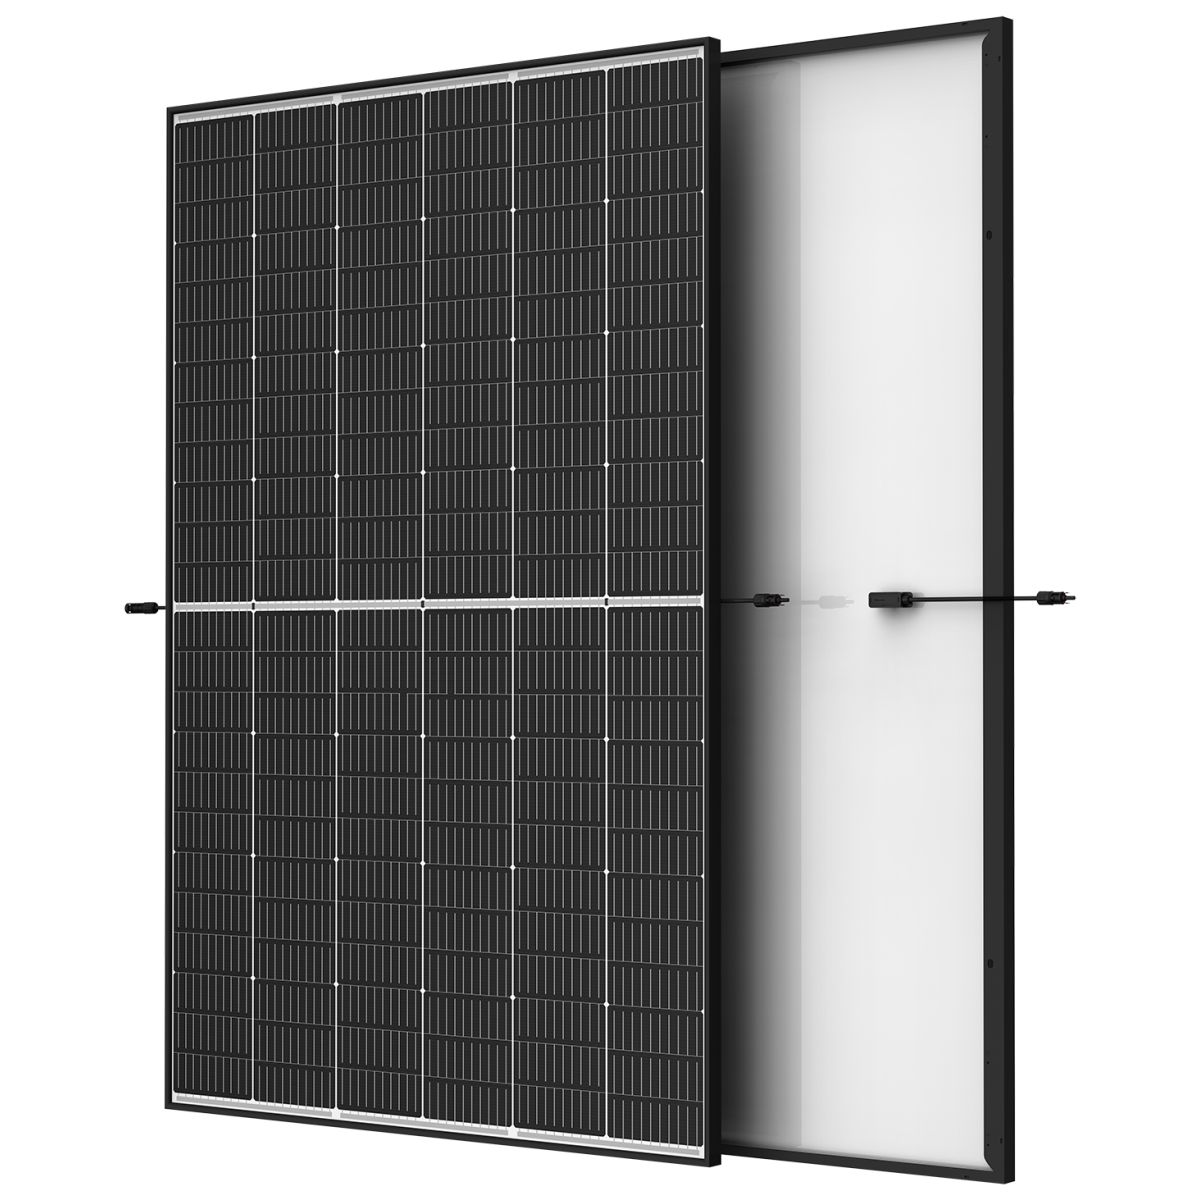 Trina 430Wp Solarmodul Vertex S Mono TSM-430-DE09R.08-MC4. 1762x1134x30mm, schwarzer Rahmen / weißes Backsheet, monokristallin 144 Drittelzelle